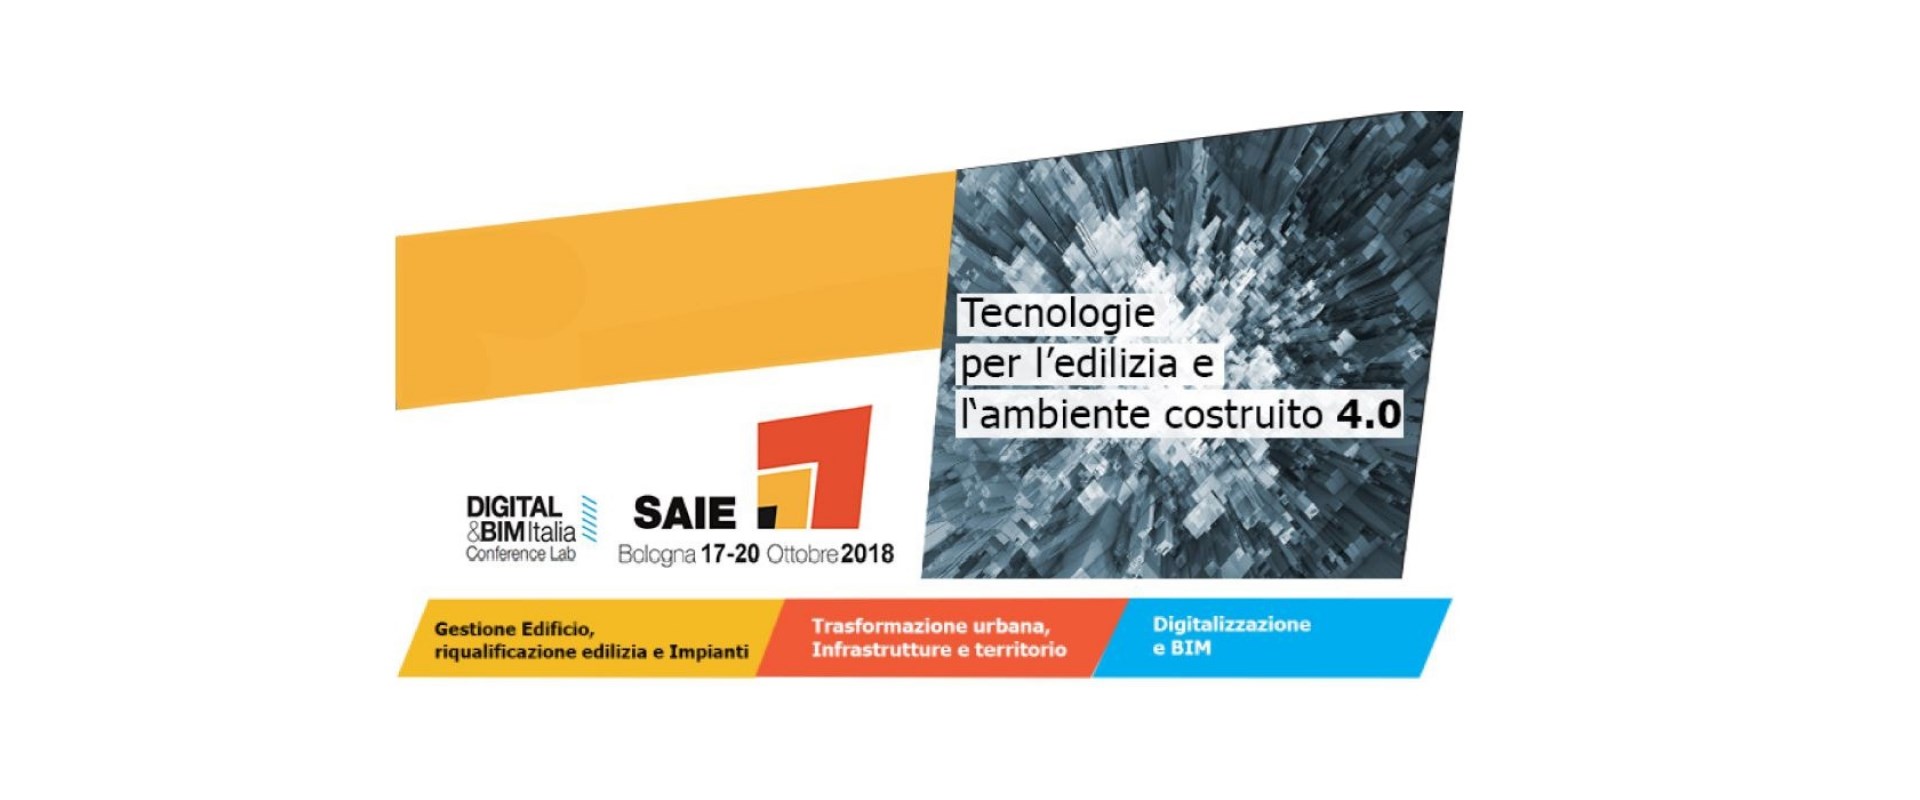 SAIE Bologna 2018 tecnologie per edilizia